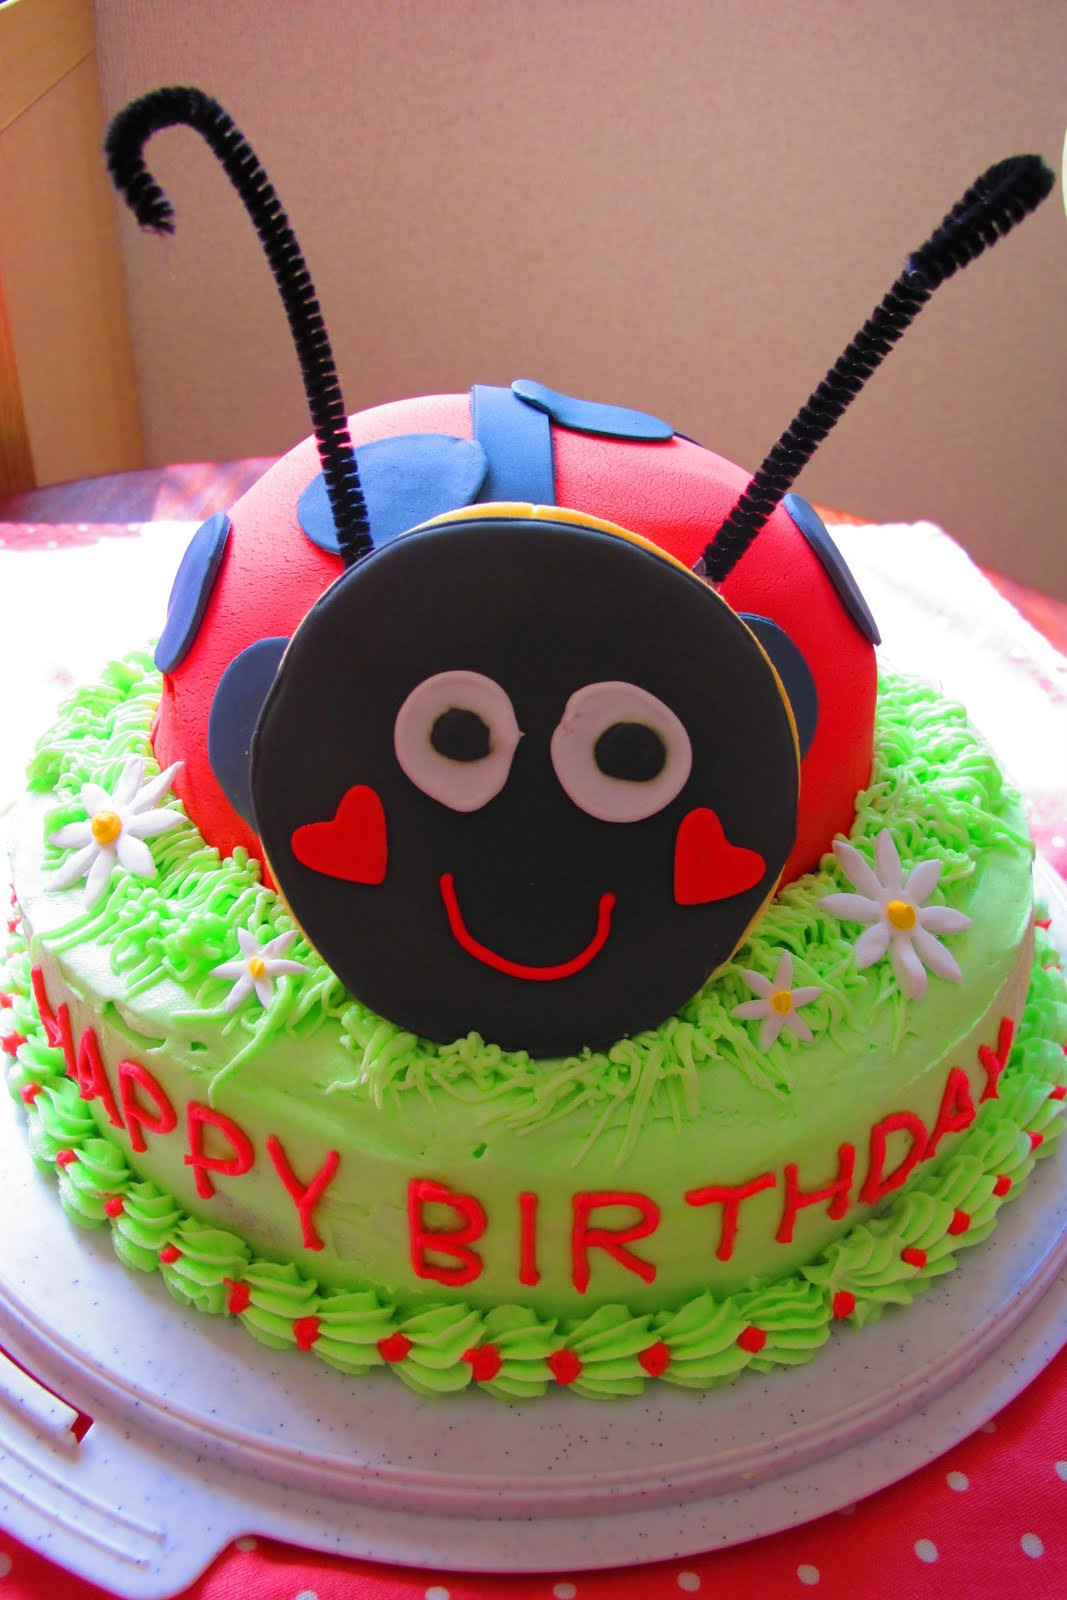 Ladybug Birthday Cakes
 Tortelicious Ladybug Birthday Party